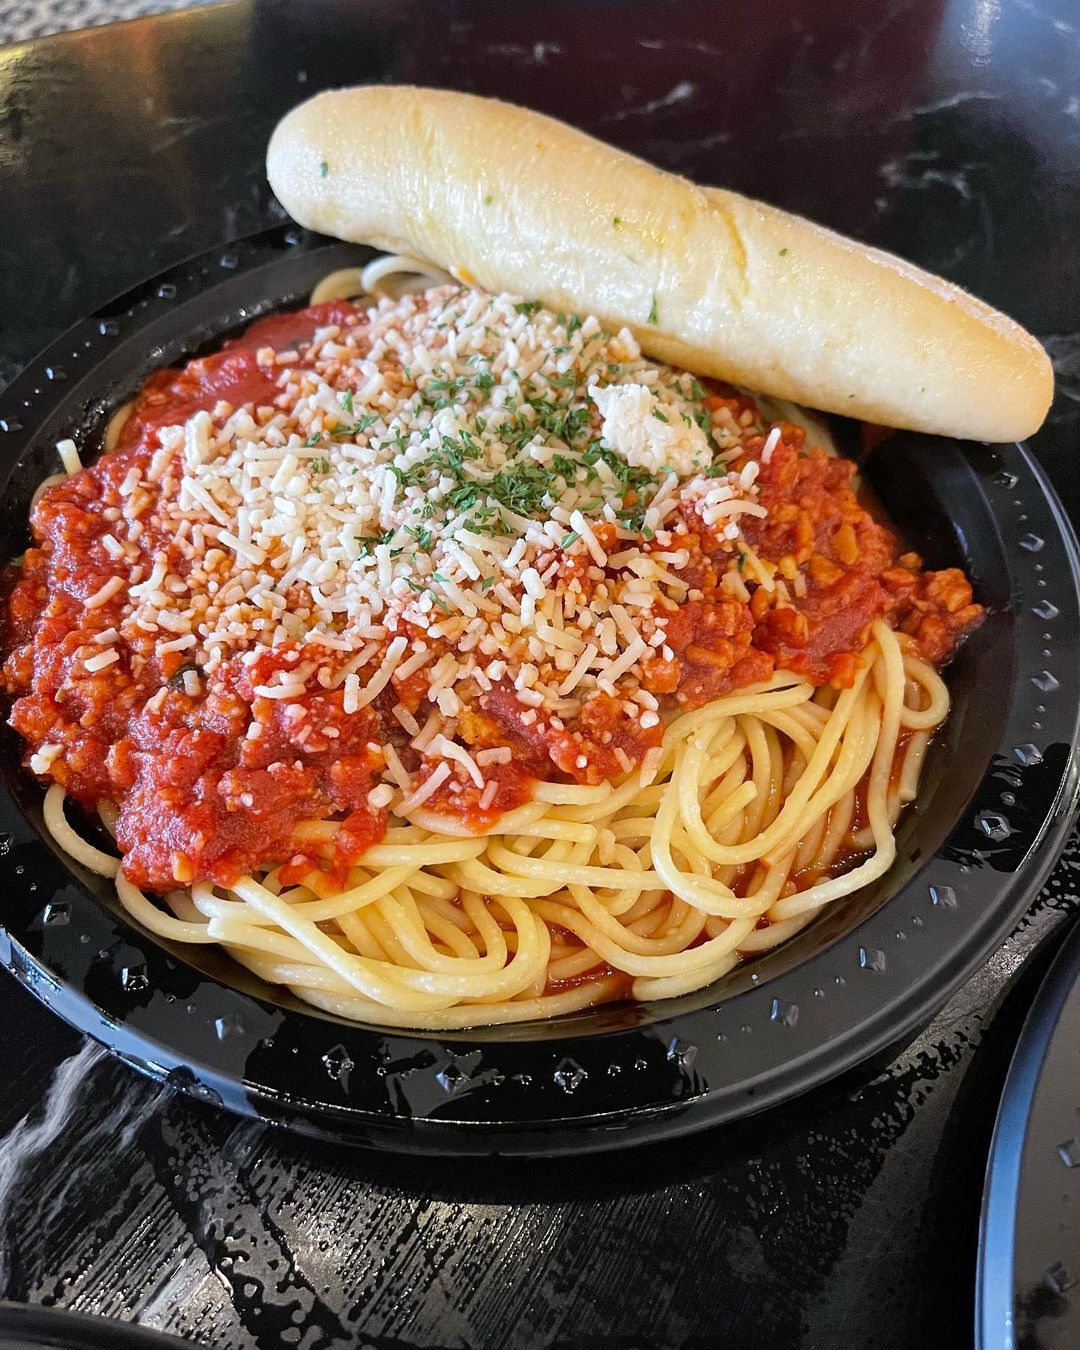 Louie's Italian Restaurant at Universal Studios